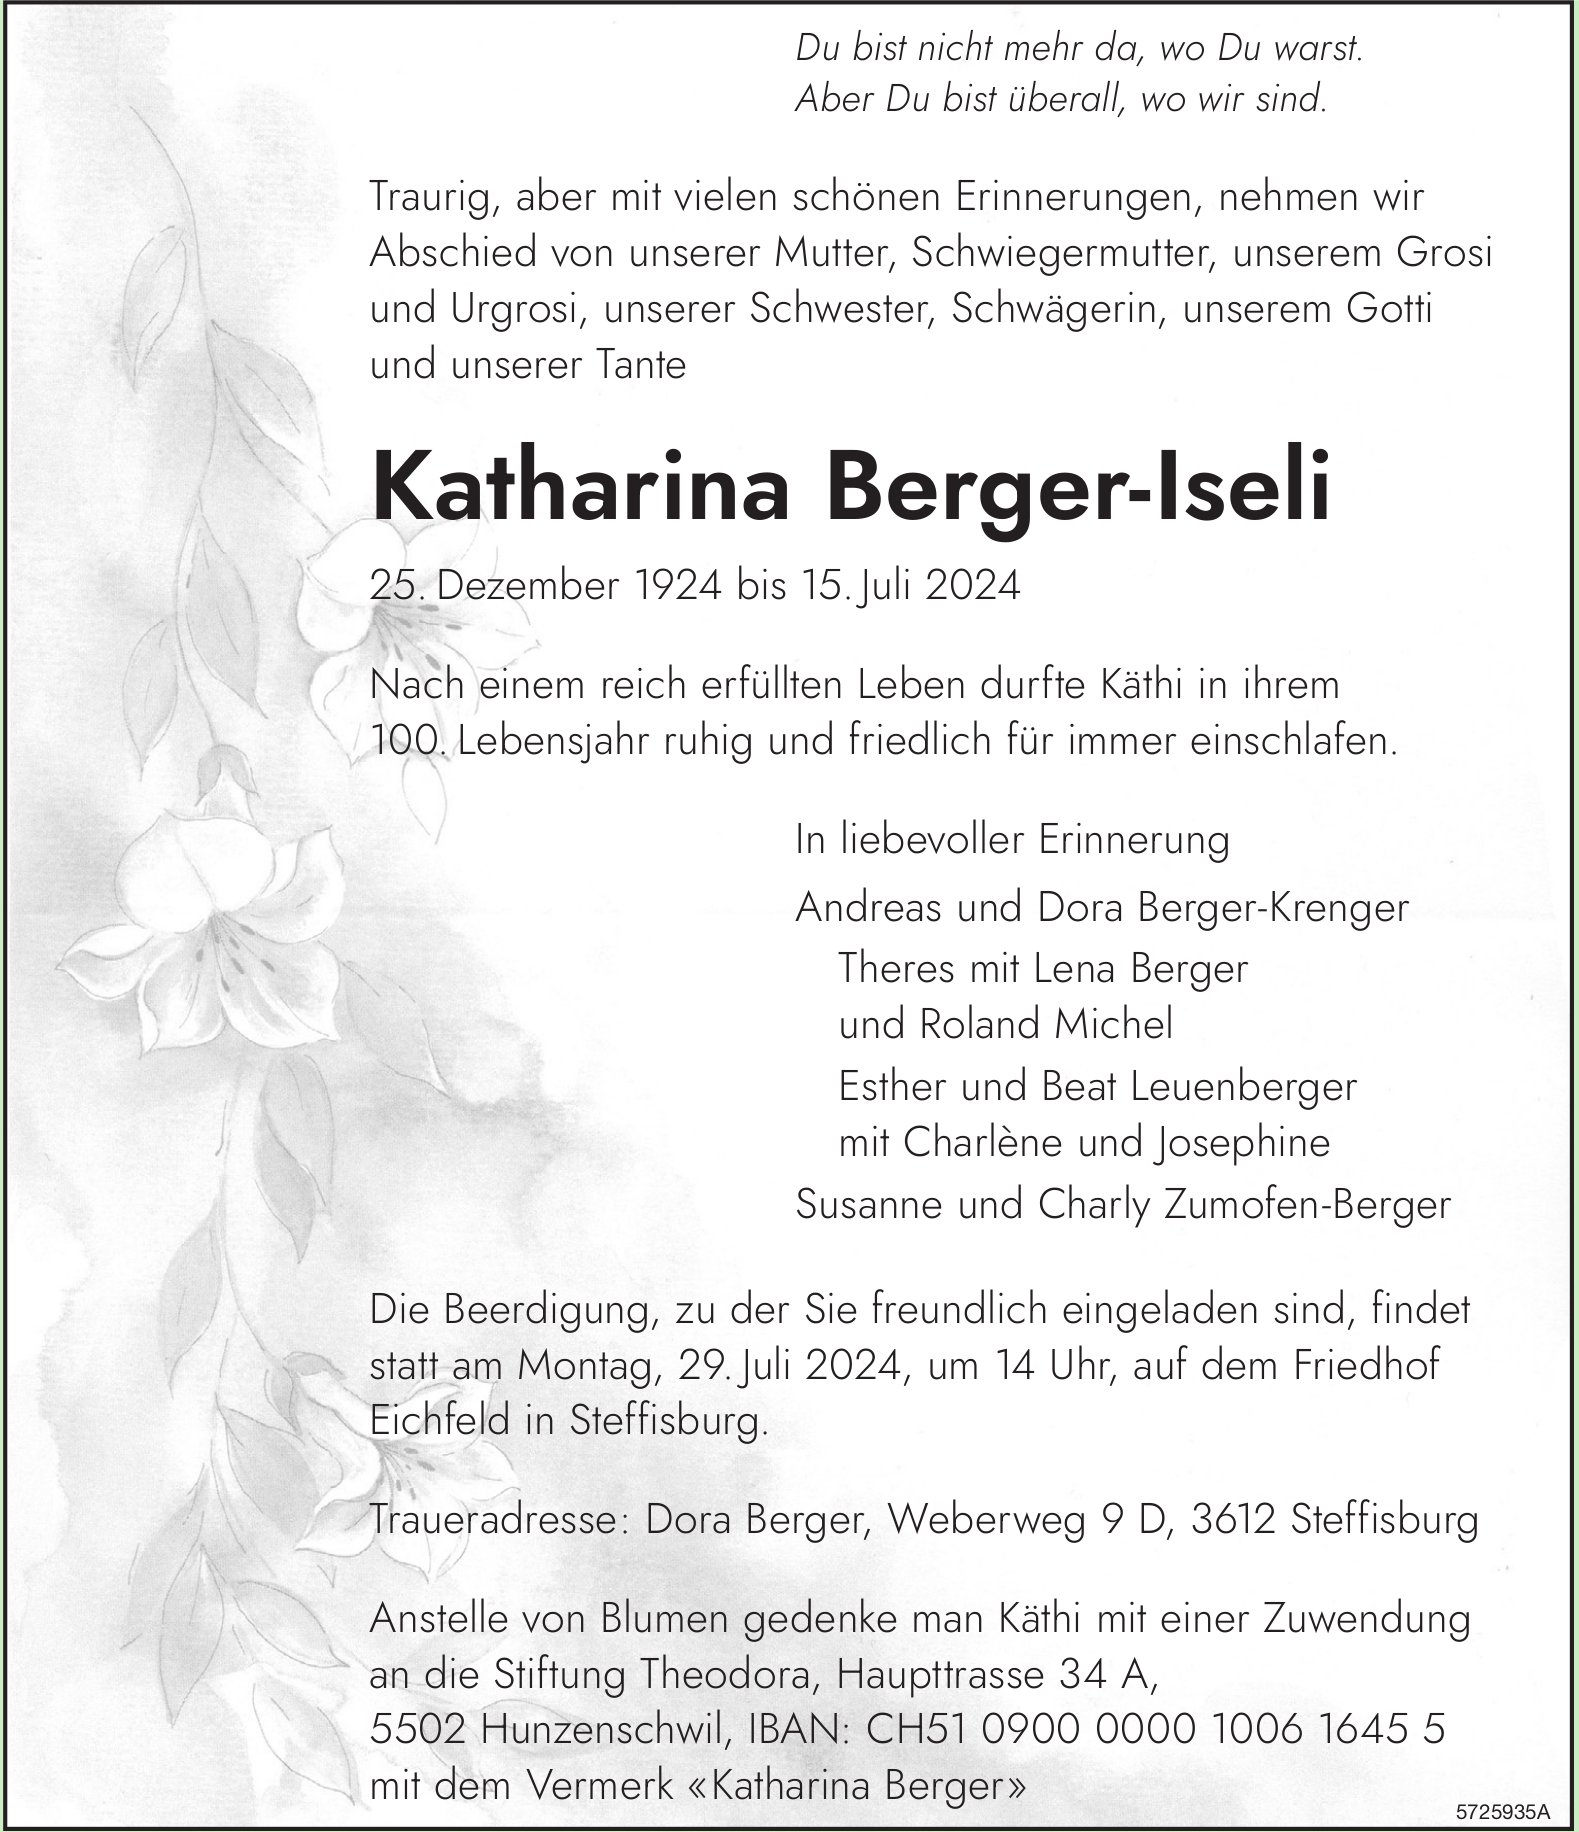 Berger-Iseli Katharina, Juli 2024 / TA